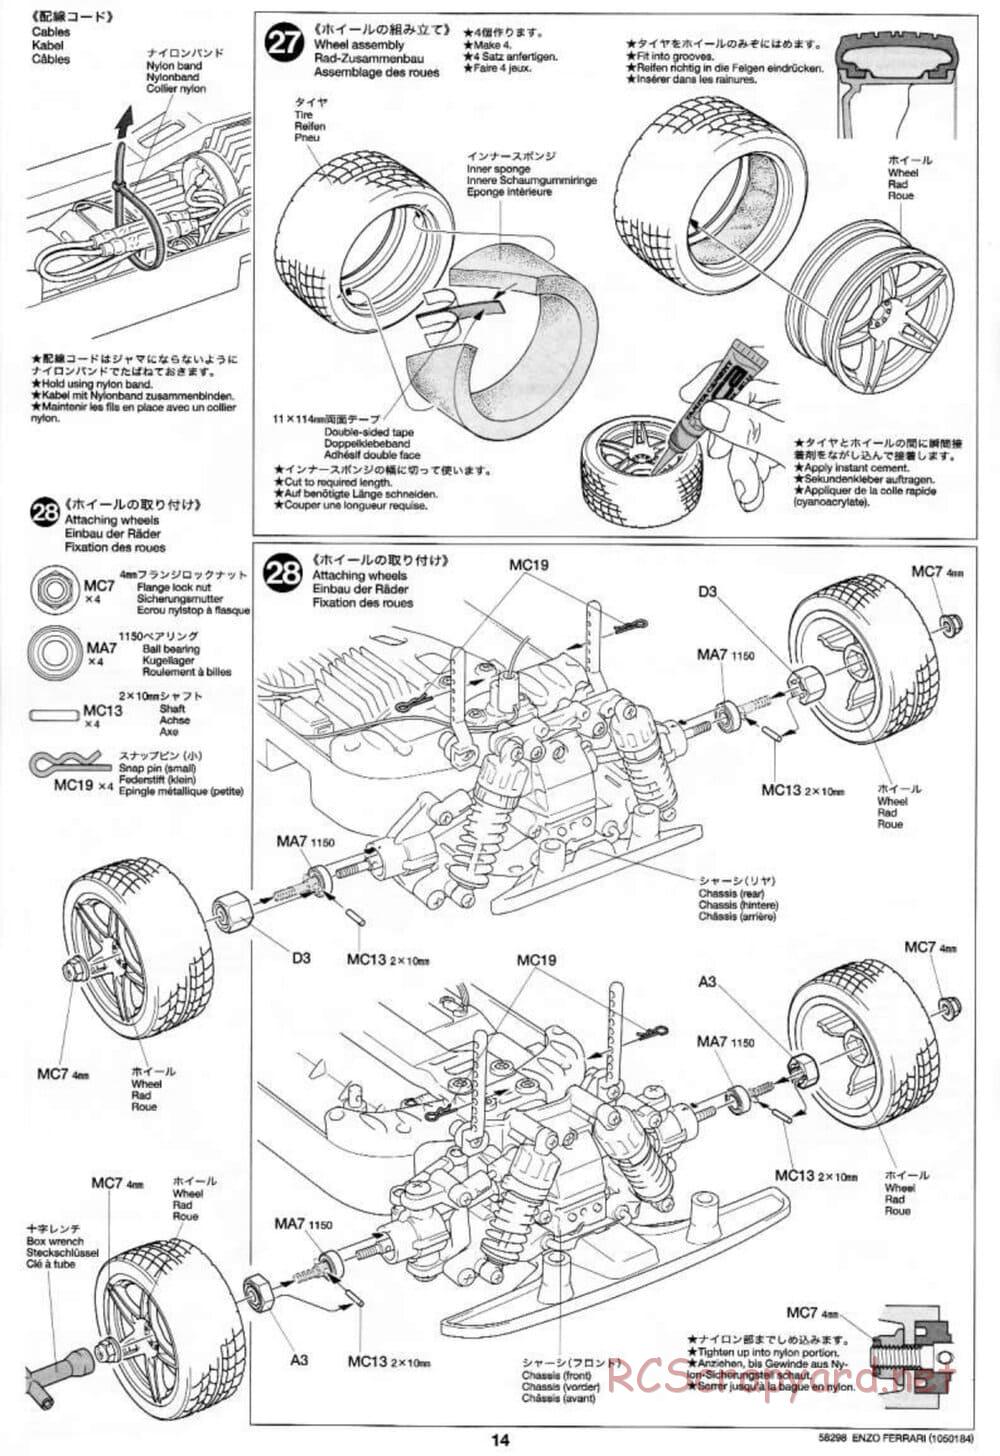 Tamiya - Enzo Ferrari - TB-01 Chassis - Manual - Page 14